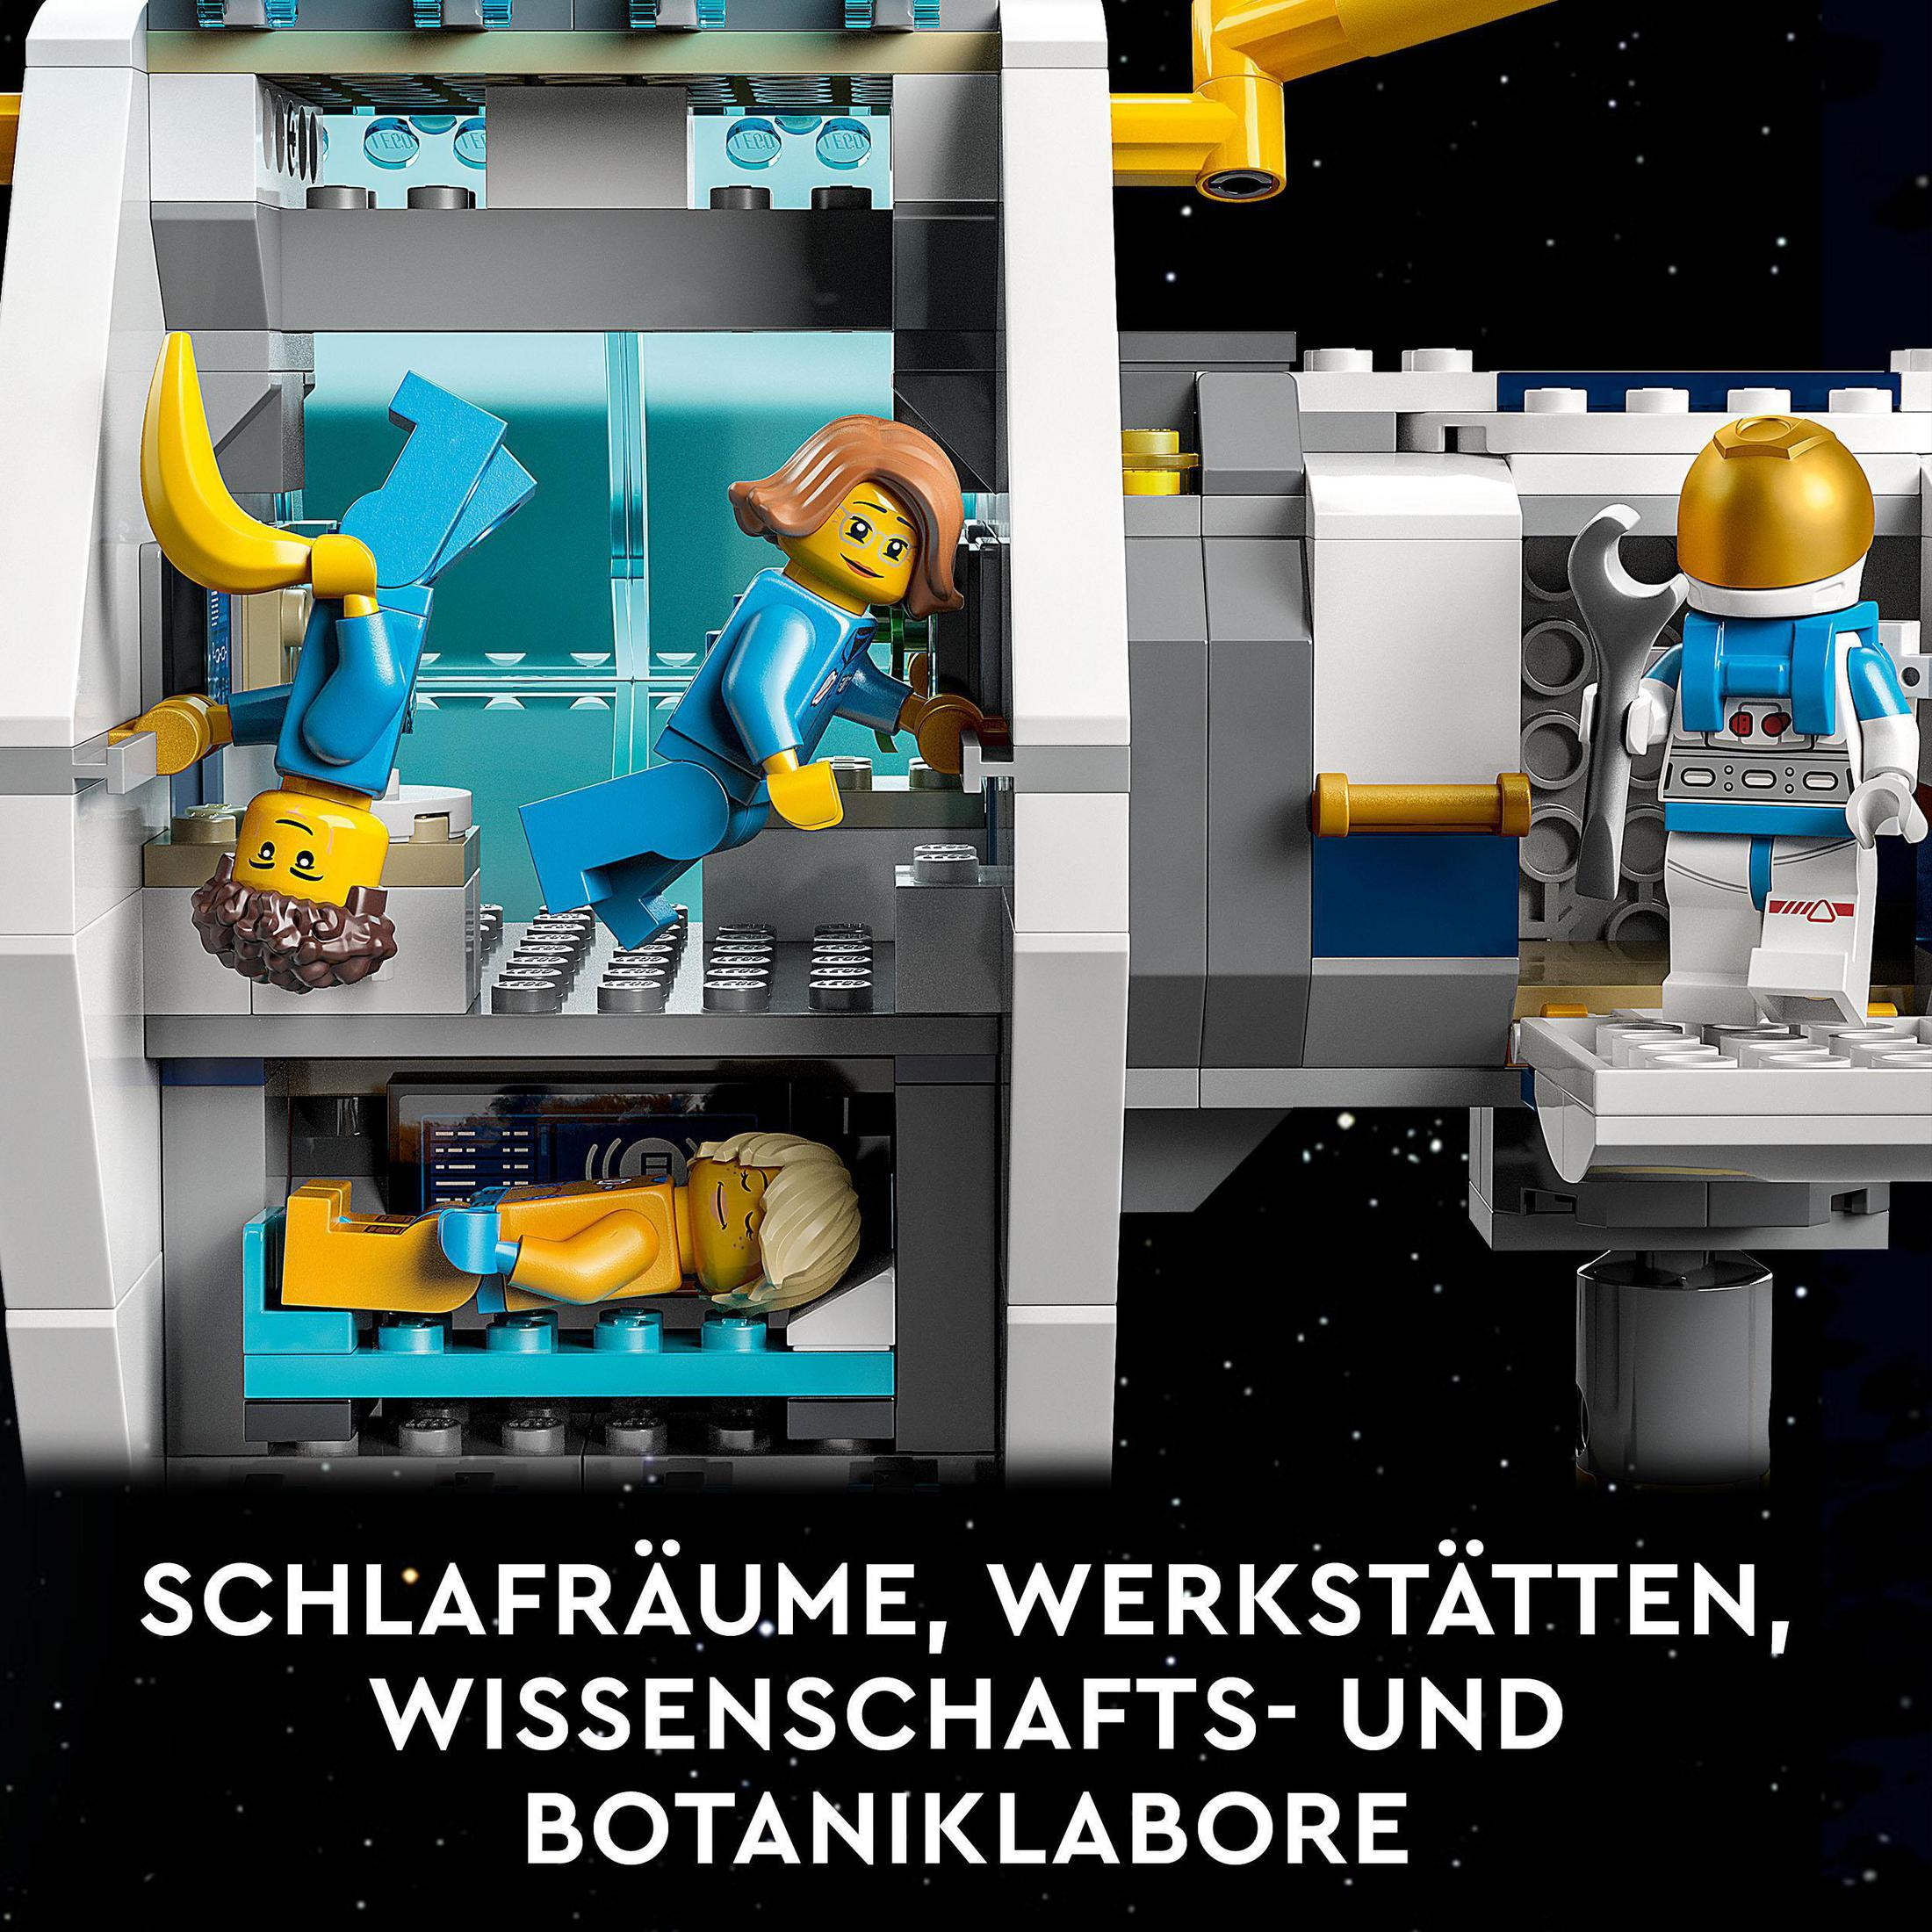 MOND-RAUMSTATION Bausatz, LEGO 60349 Mehrfarbig